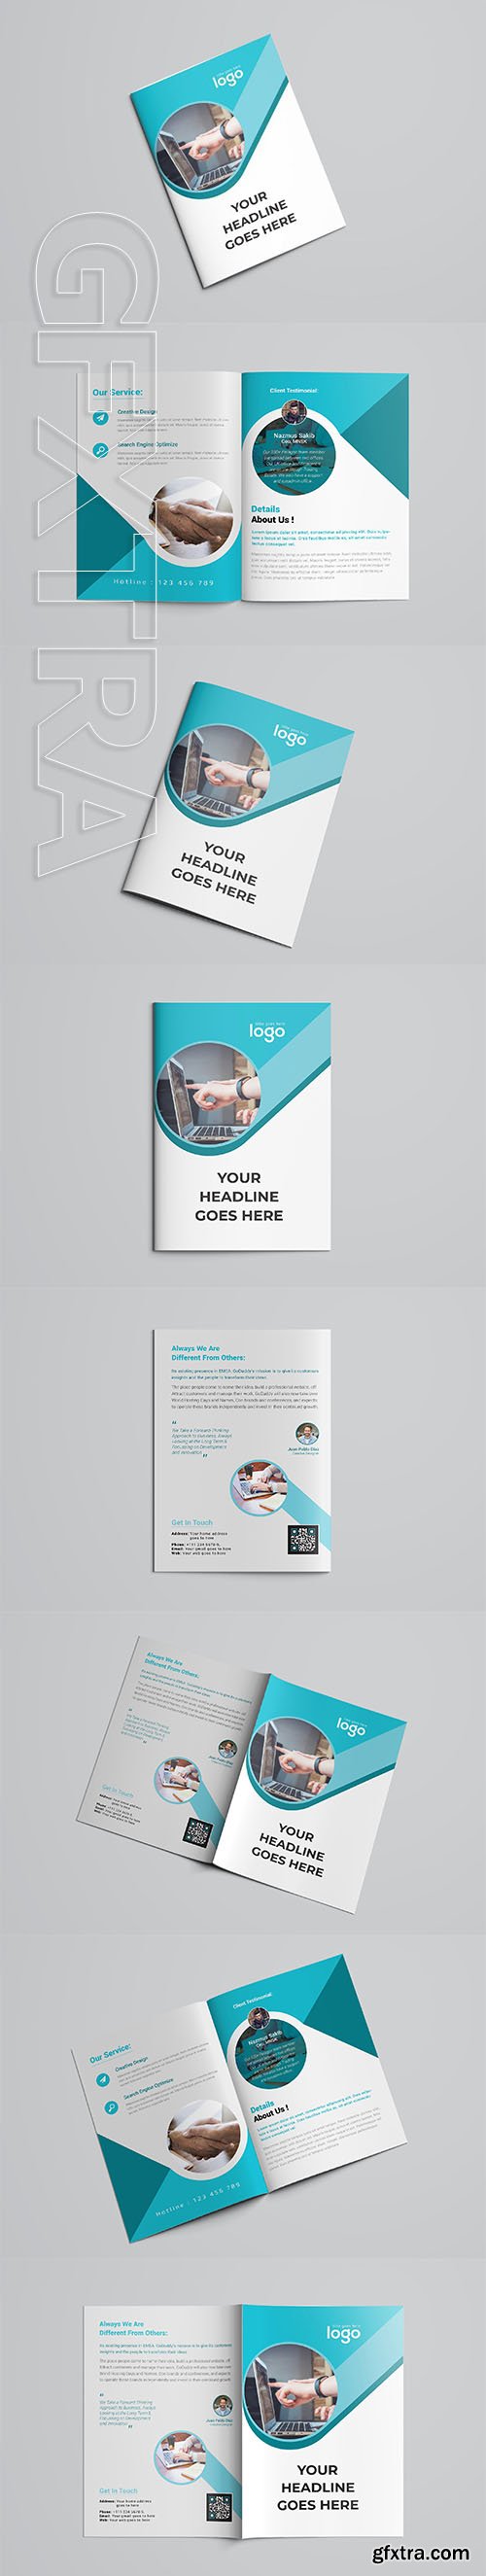 CreativeMarket - Blue Corporate Business Brochure 2621287